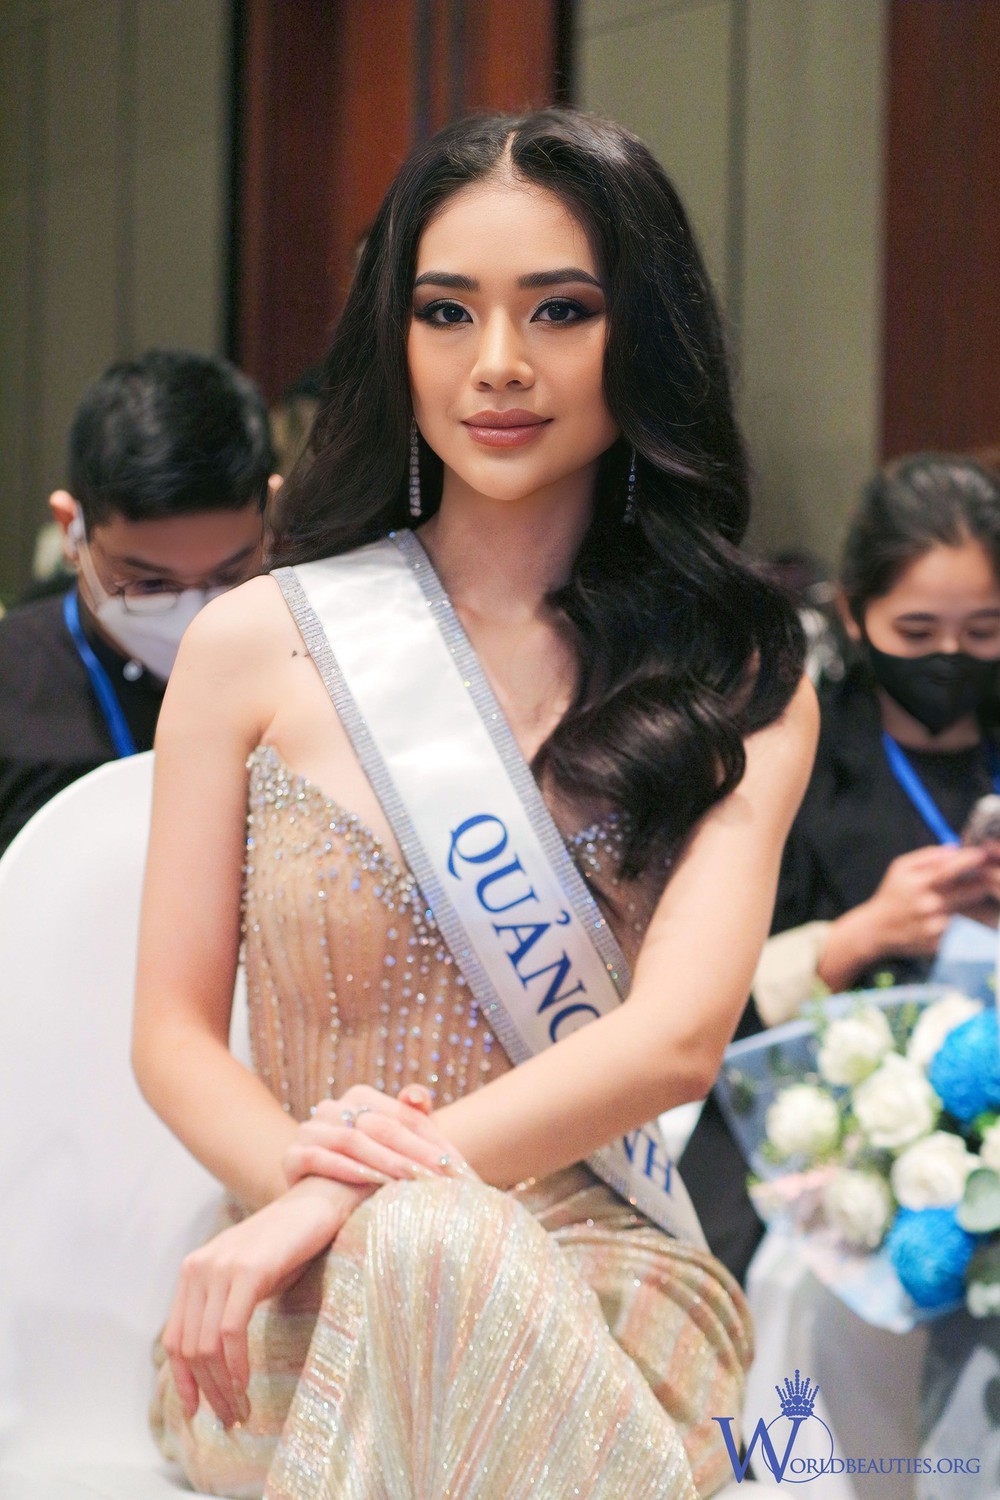 Cận nhan sắc top 18 Miss Universe Vietnam - Ảnh 8.